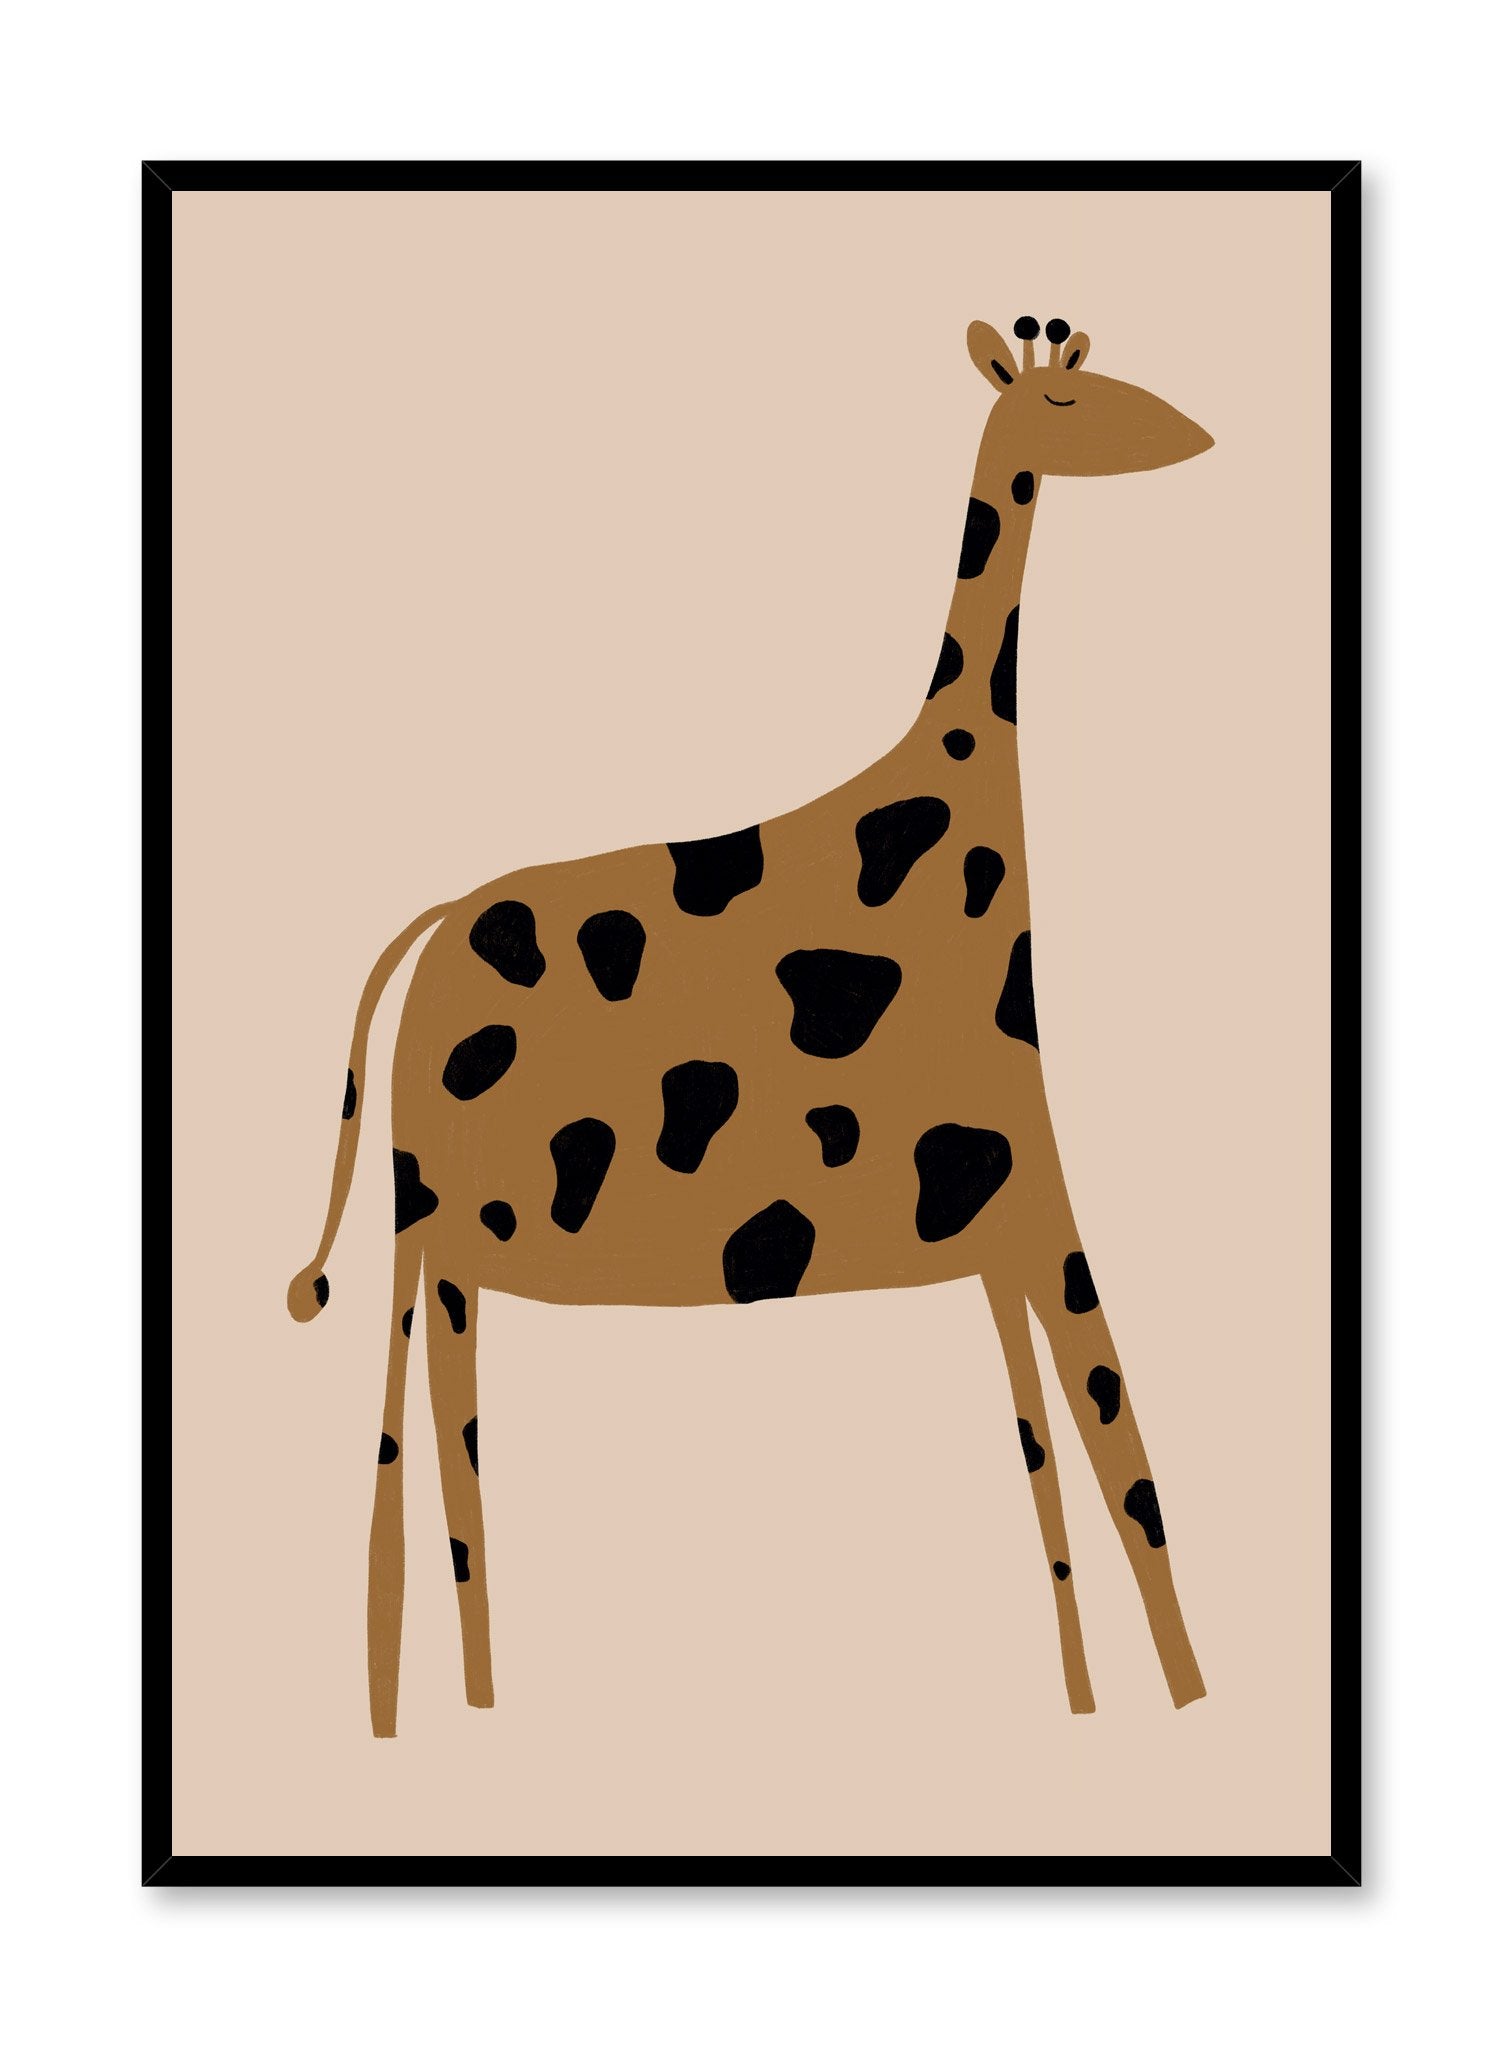 Kids nursery illustration poster by Opposite Wall with sleepy giraffe